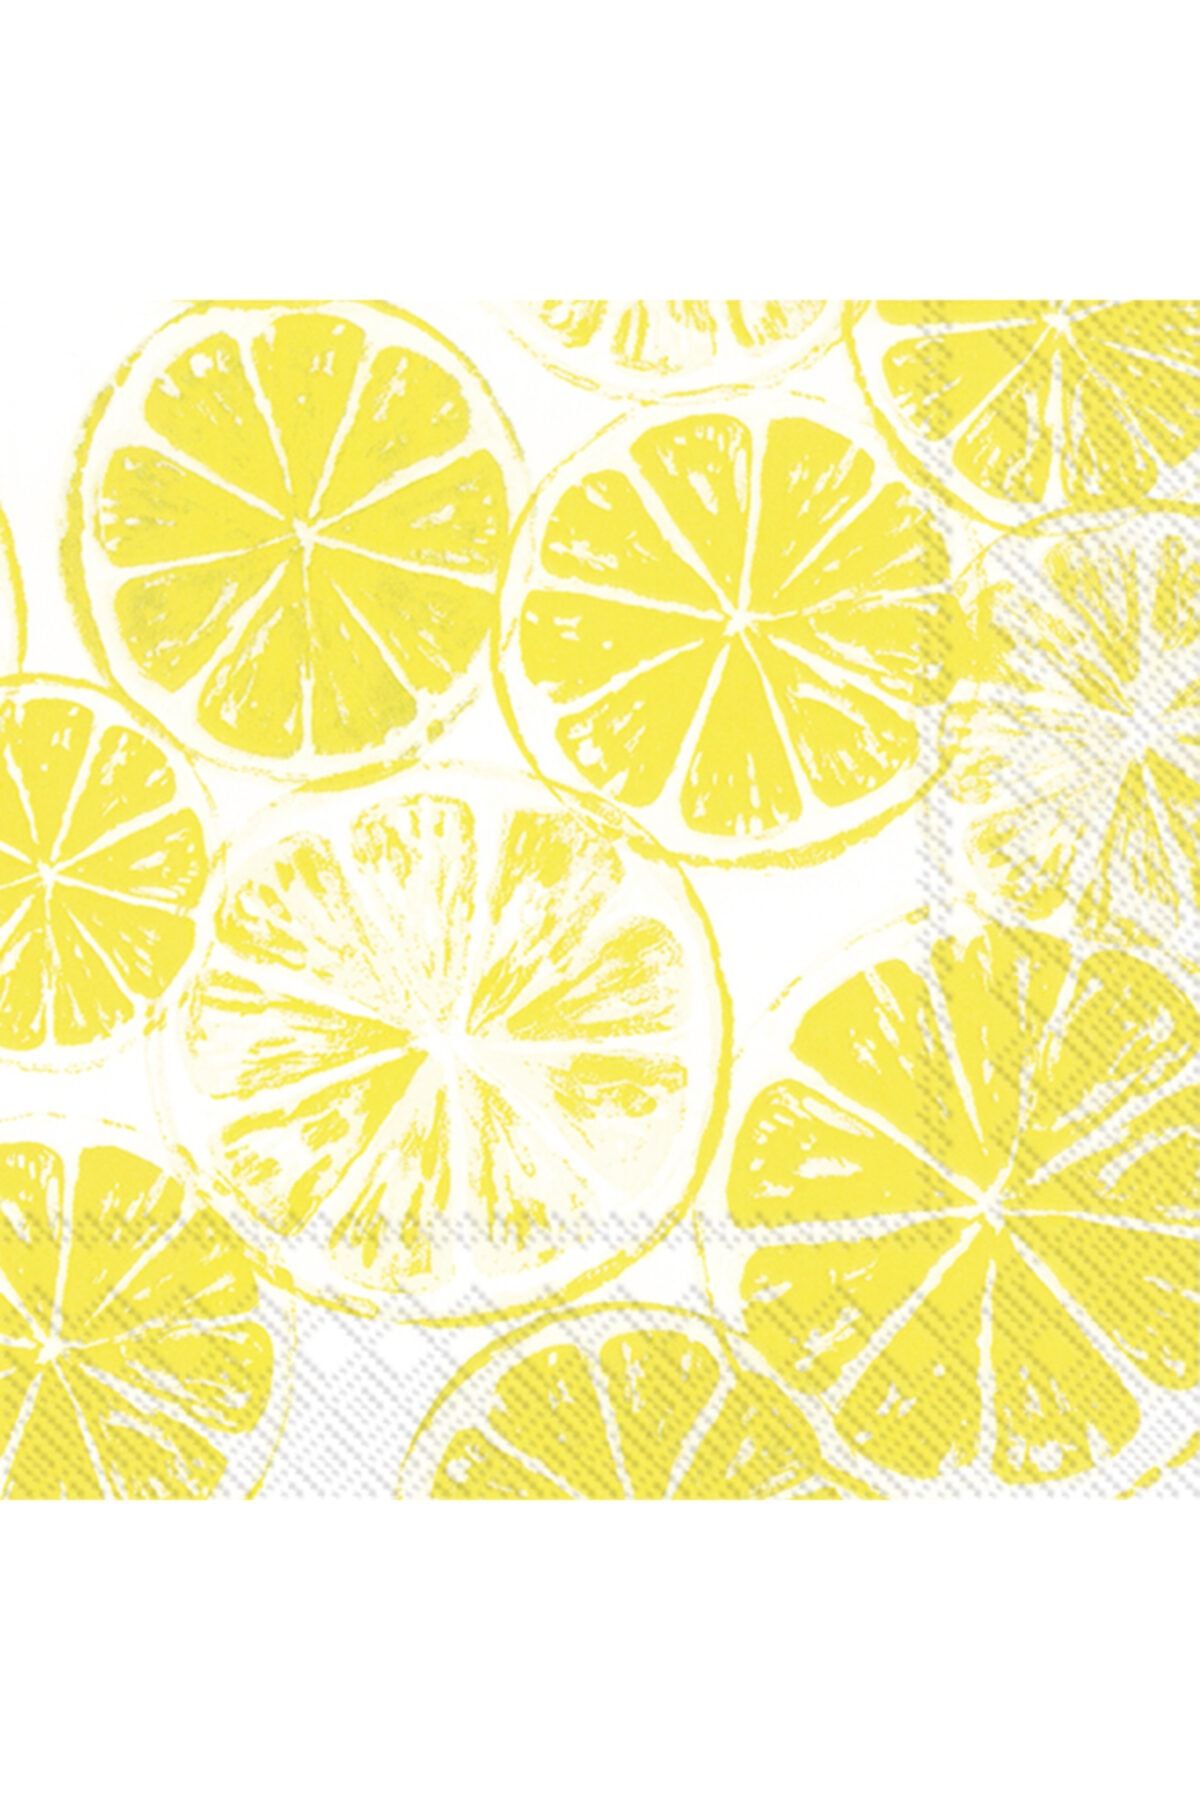 ihr made with love Lemon Bar